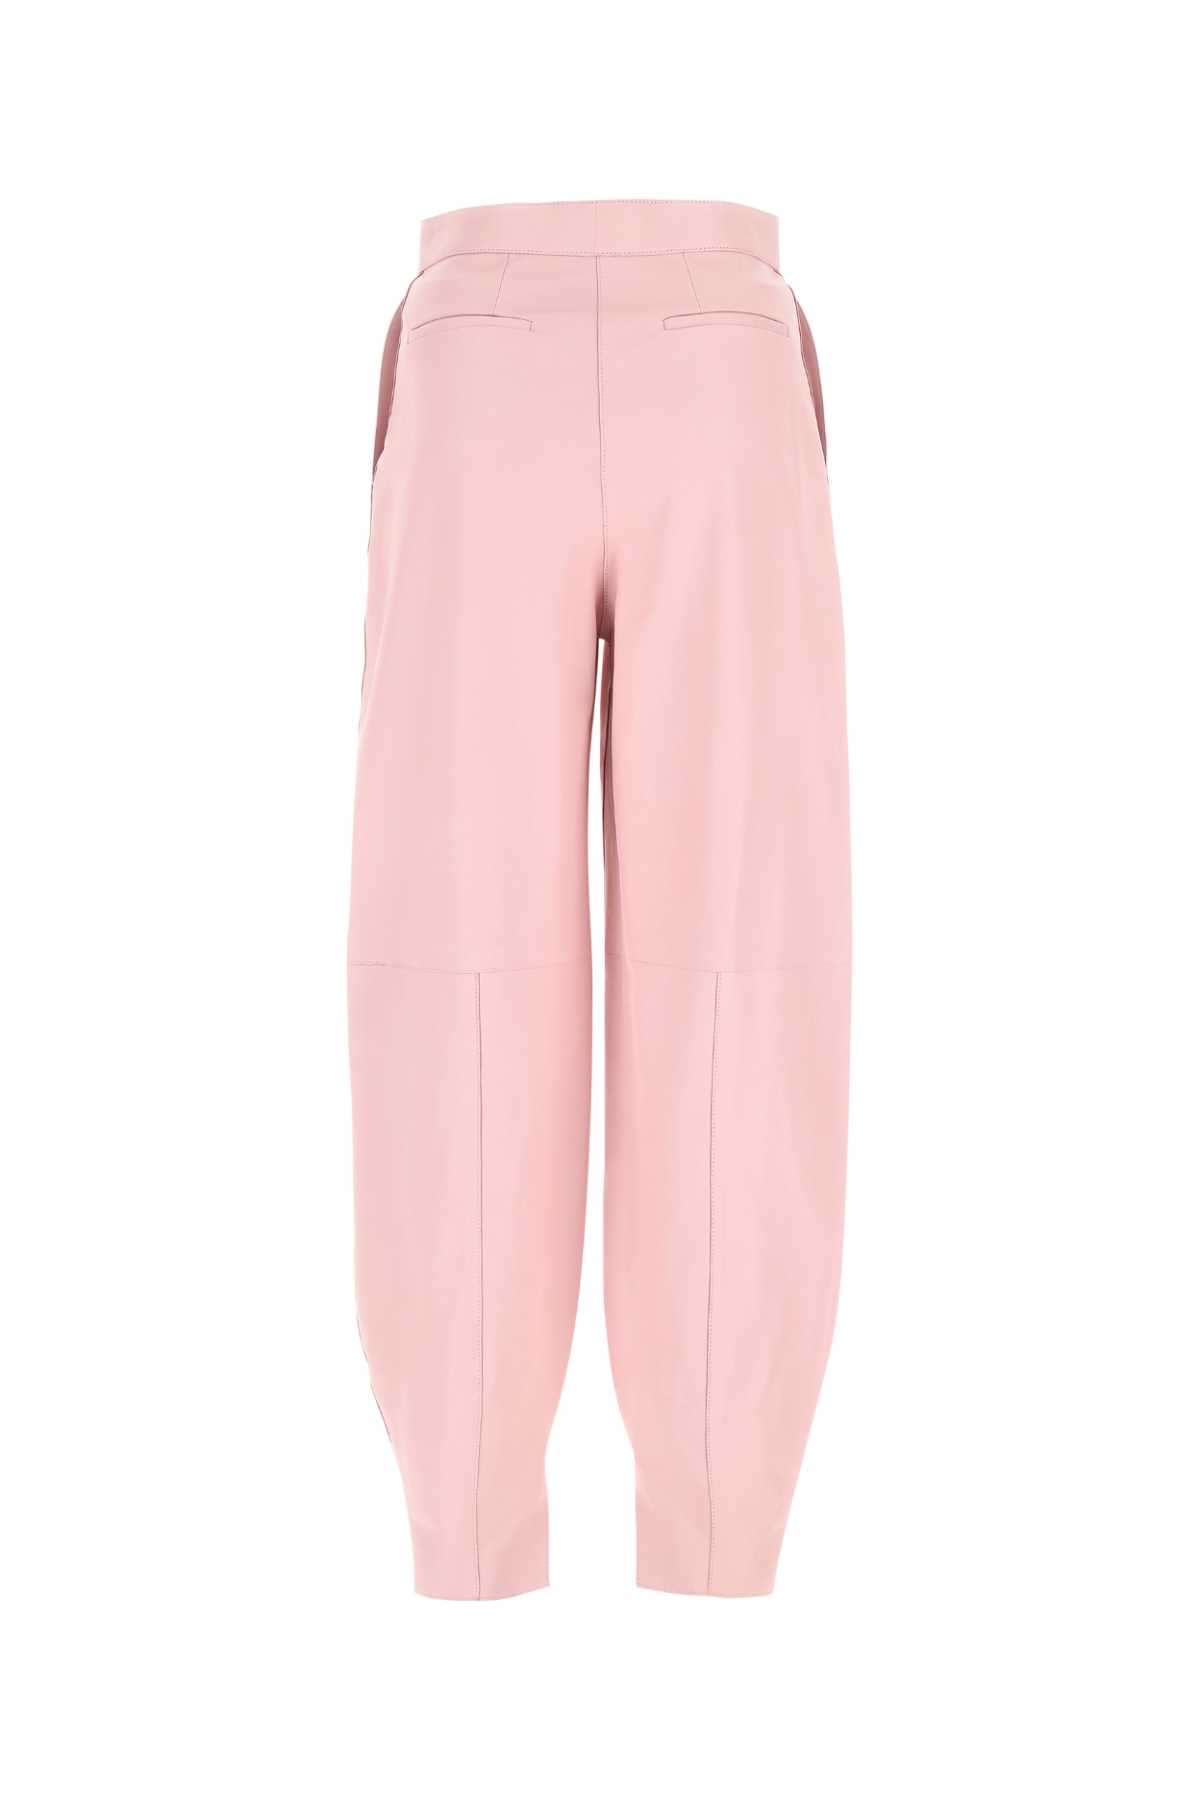 Loewe Pastel Pink Leather Pant In Lightpink